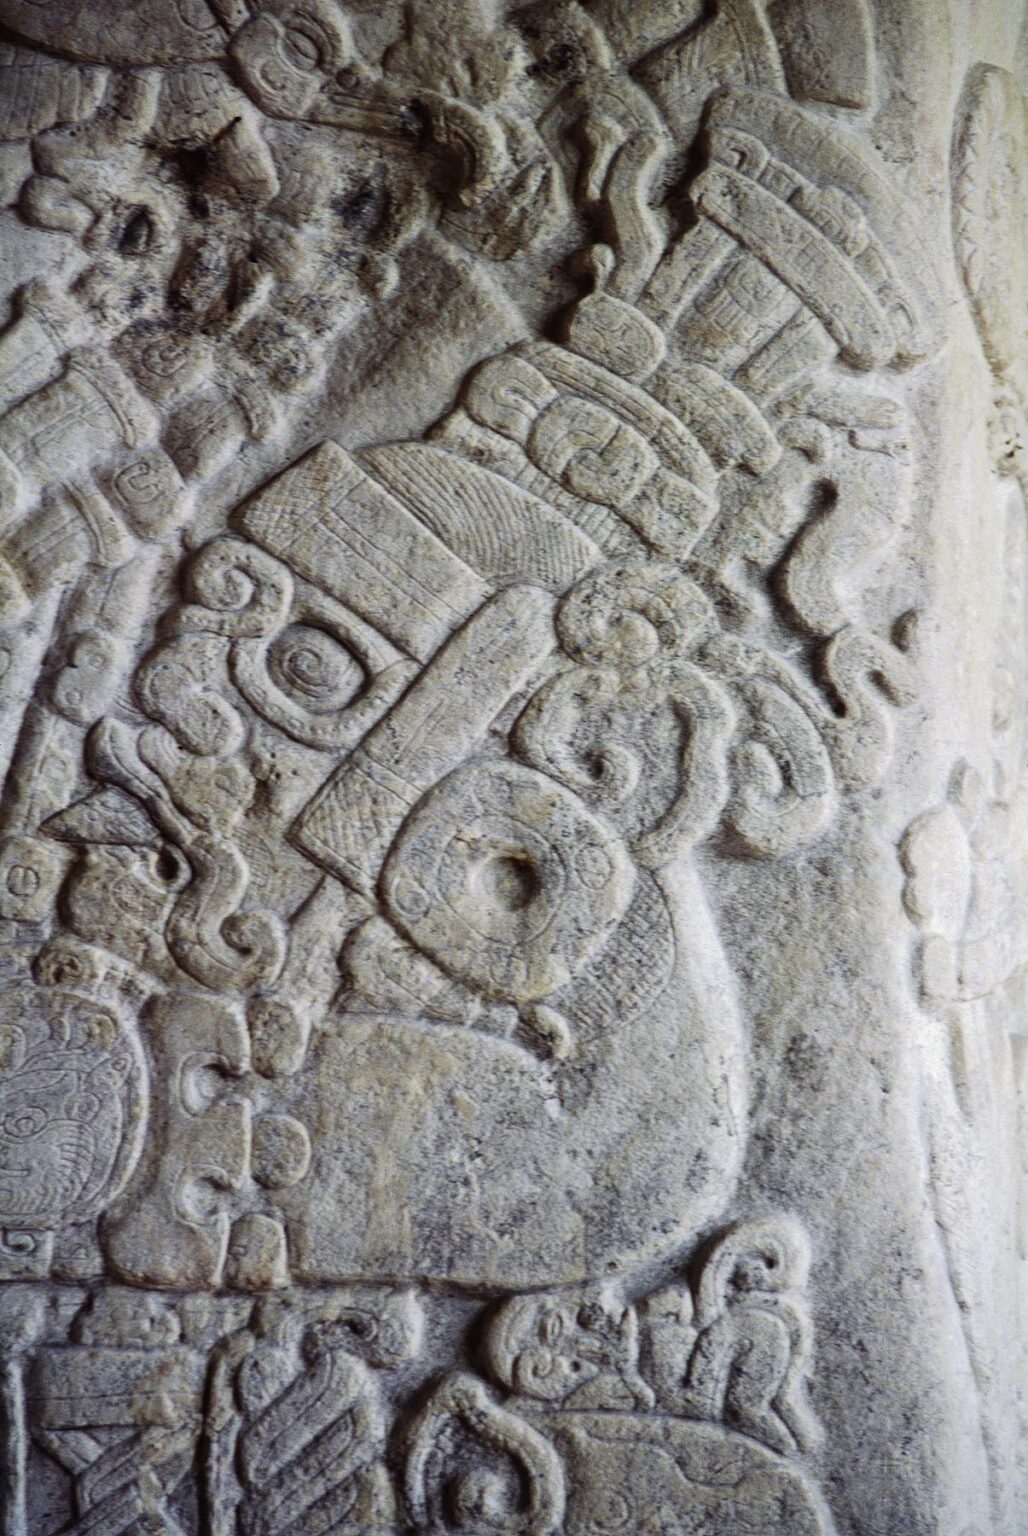 STELA 31 (445 AD) depicts a MAYA RULER with elaborate carved power symbols - TIKAL MUSEUM, TIKAL RUINS, GUATEMALA